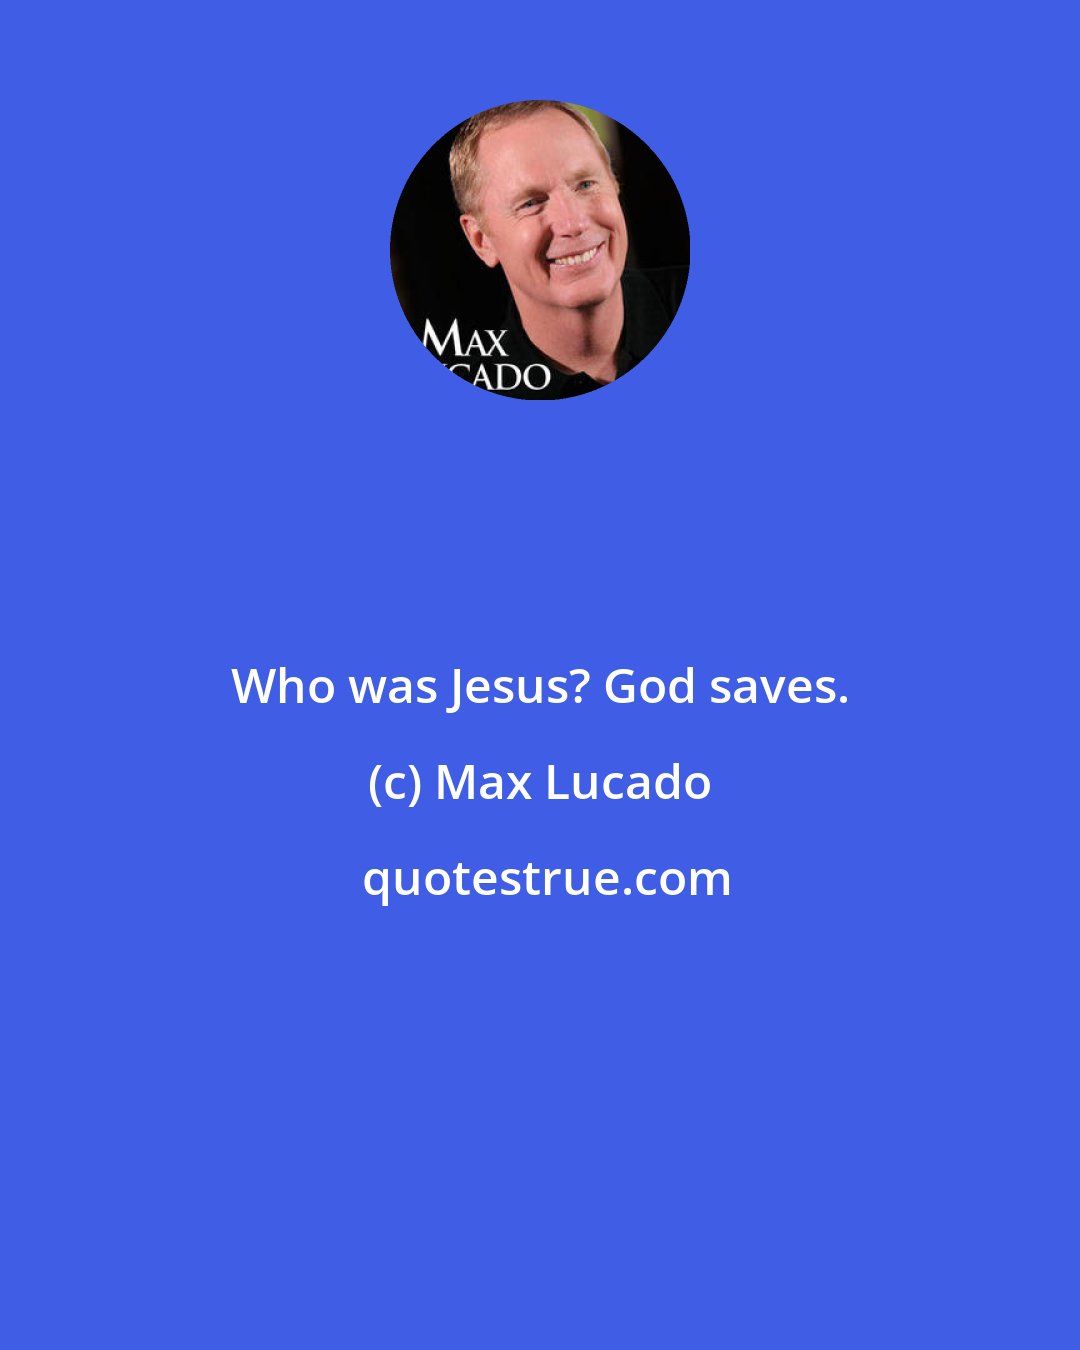 Max Lucado: Who was Jesus? God saves.